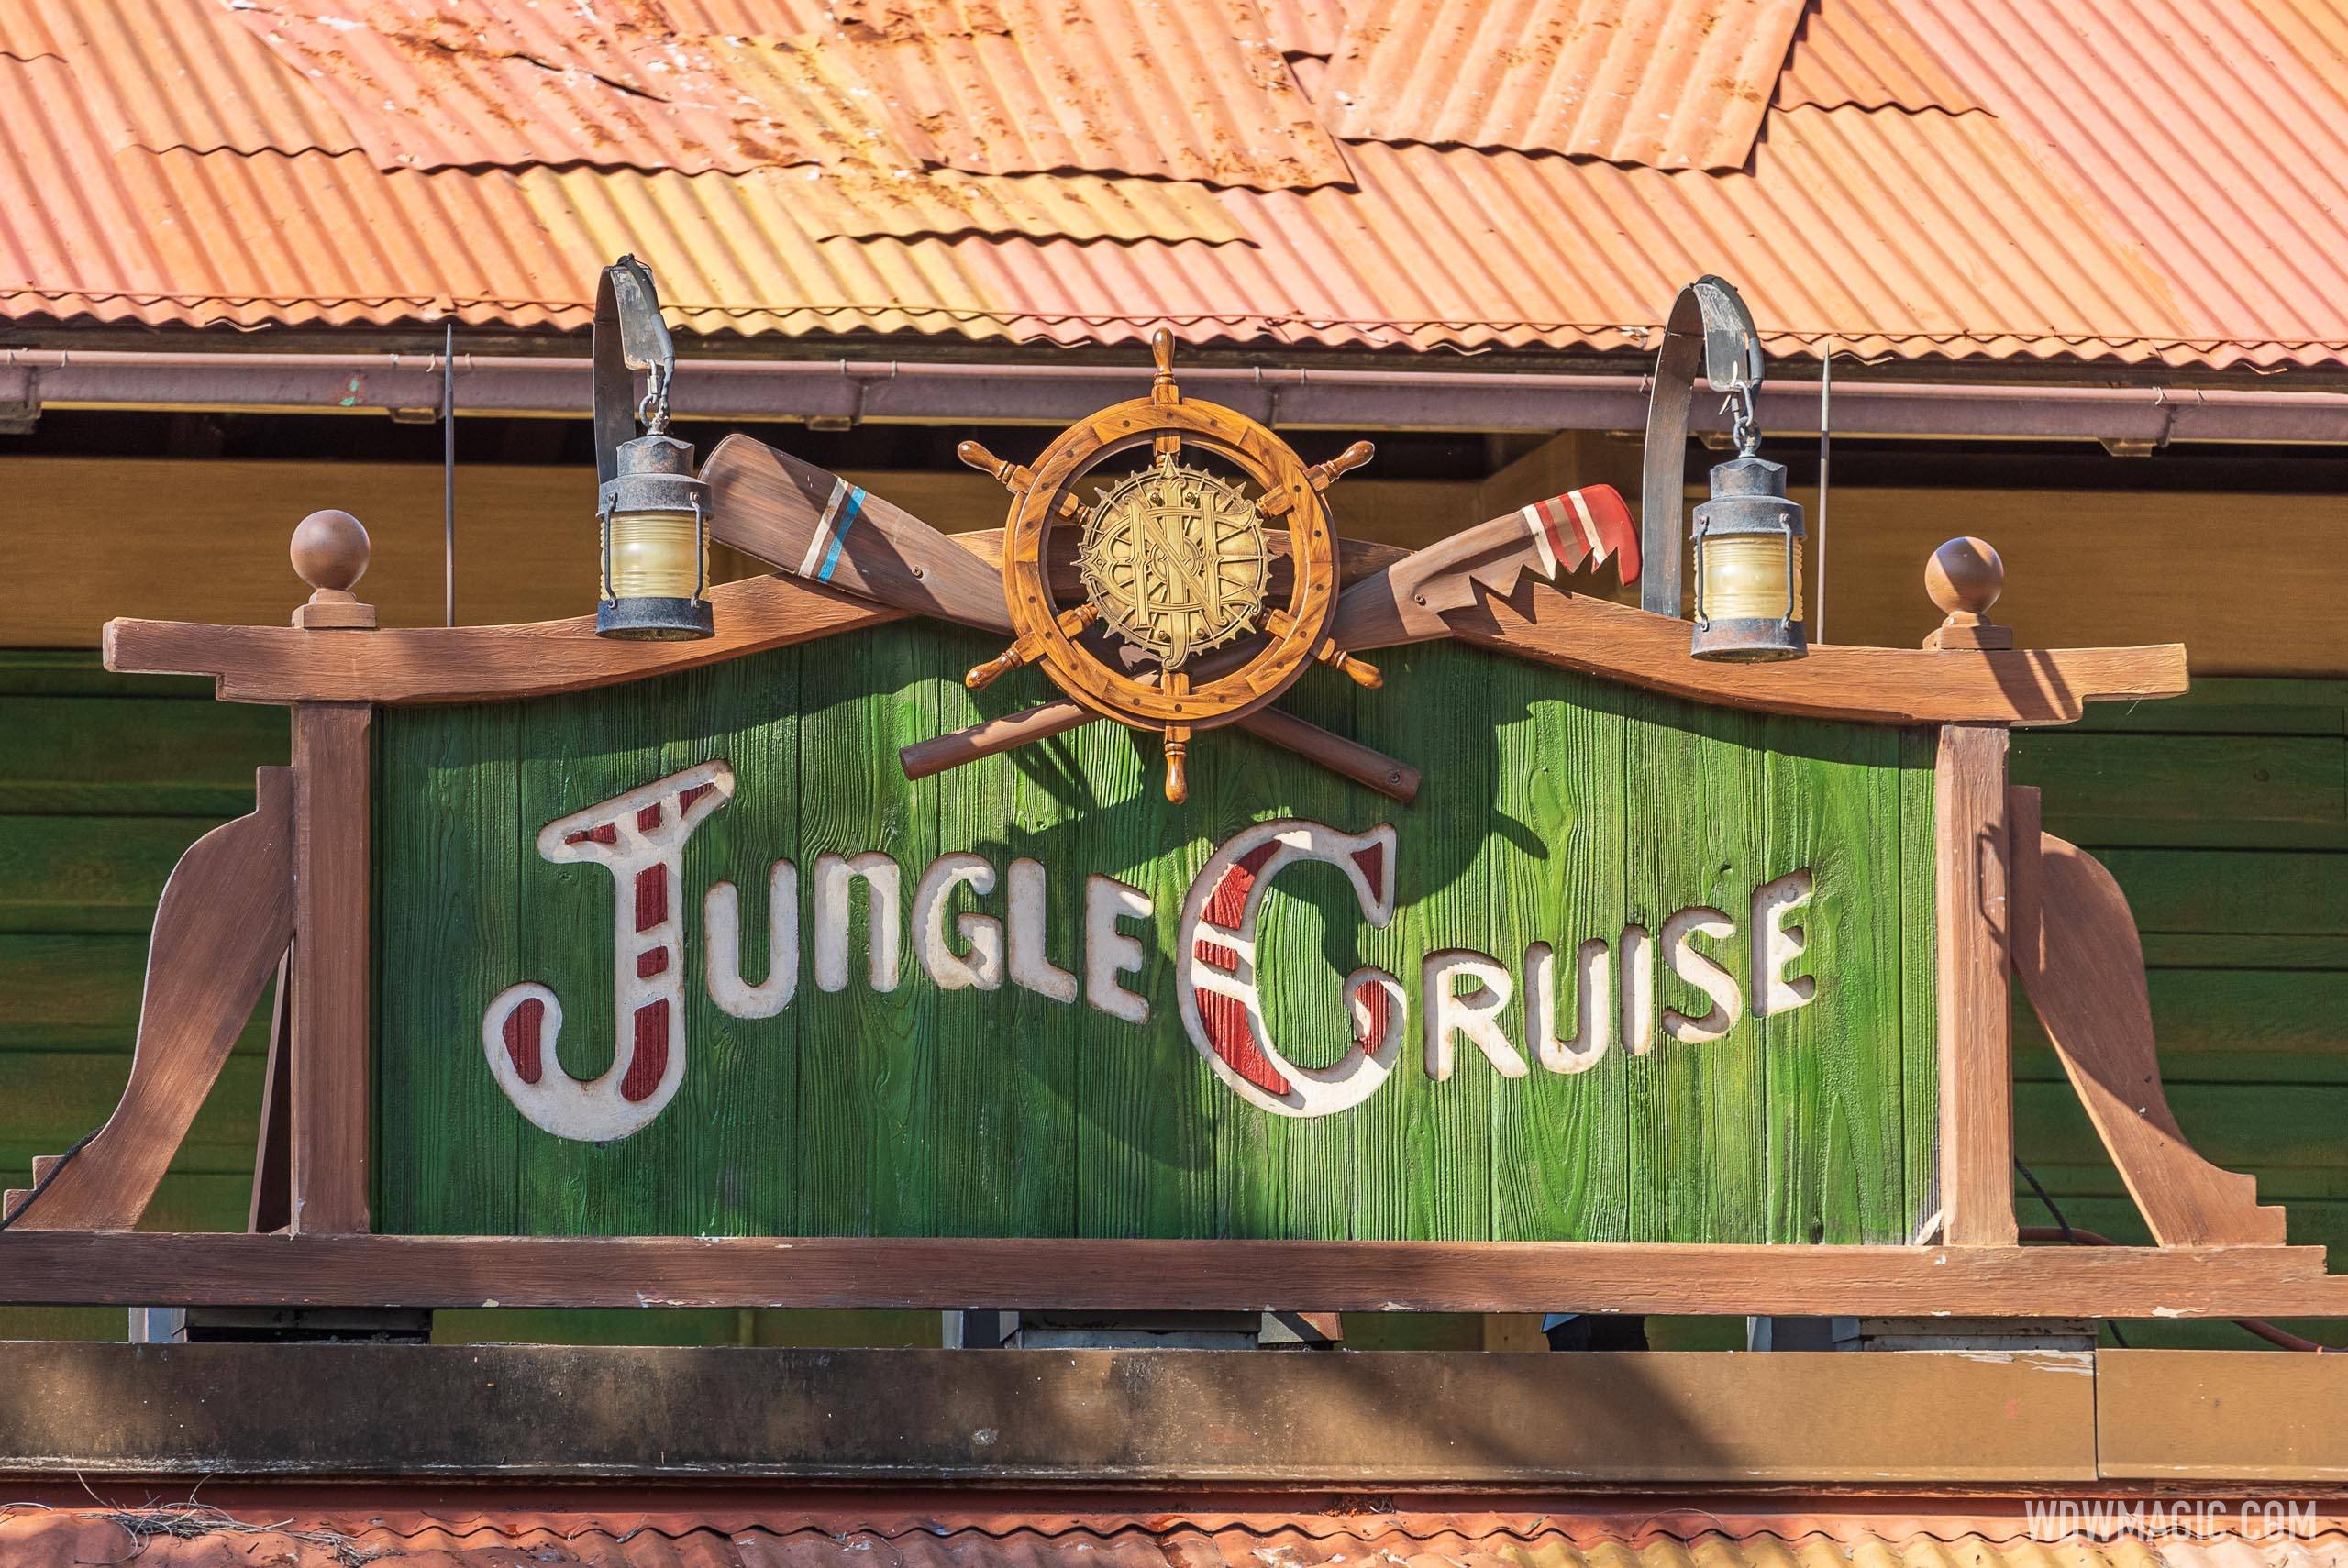 New Jungle Cruise entrance sign